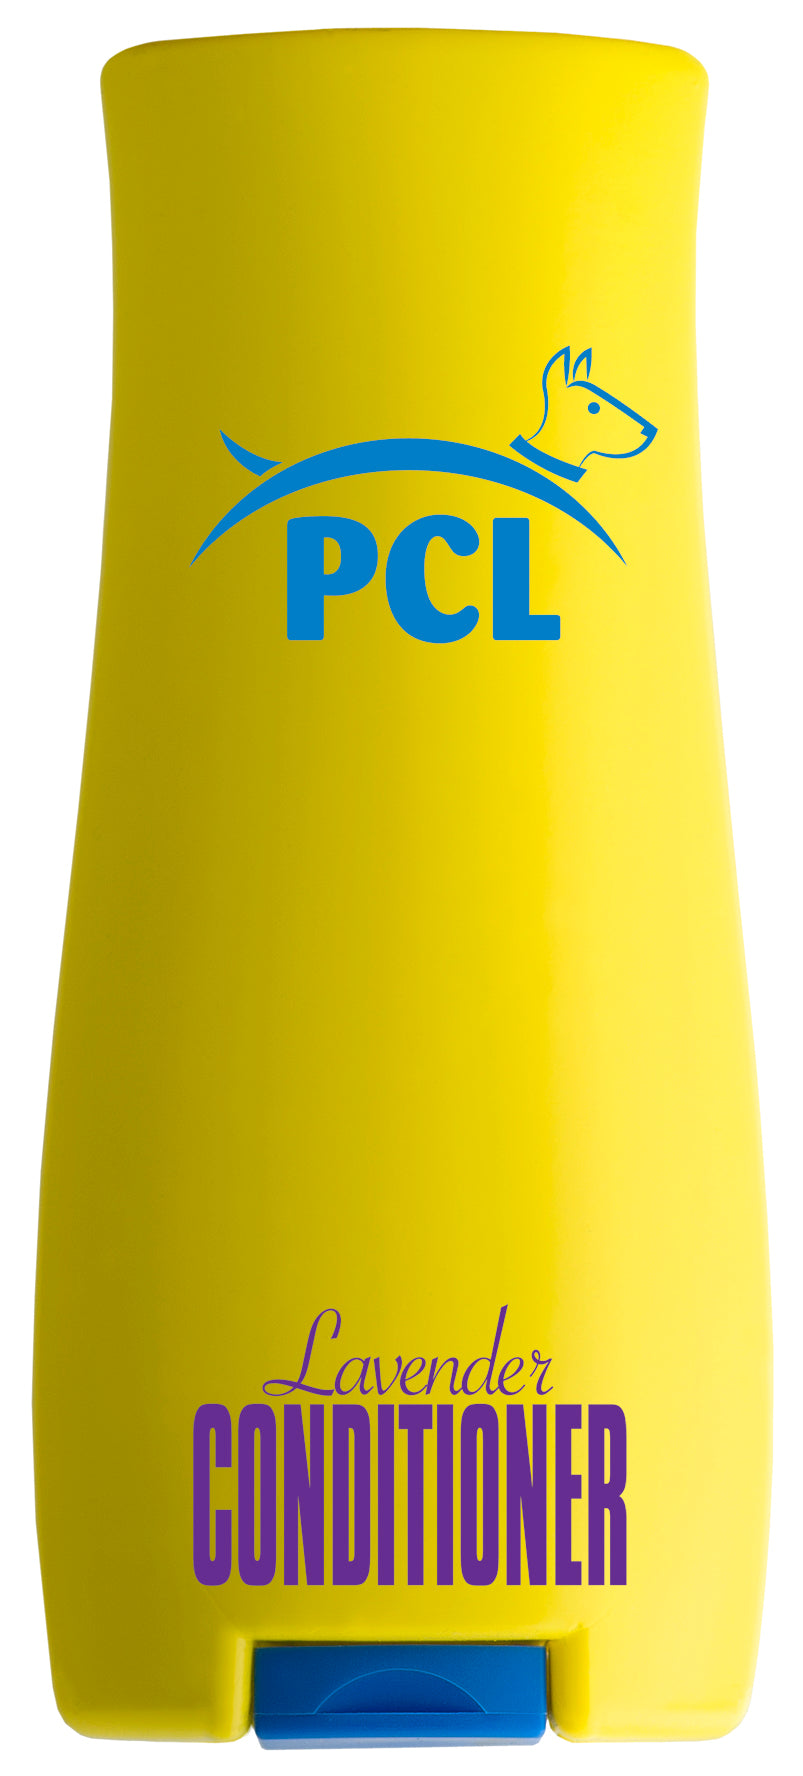 PCL Conditioner Lavender